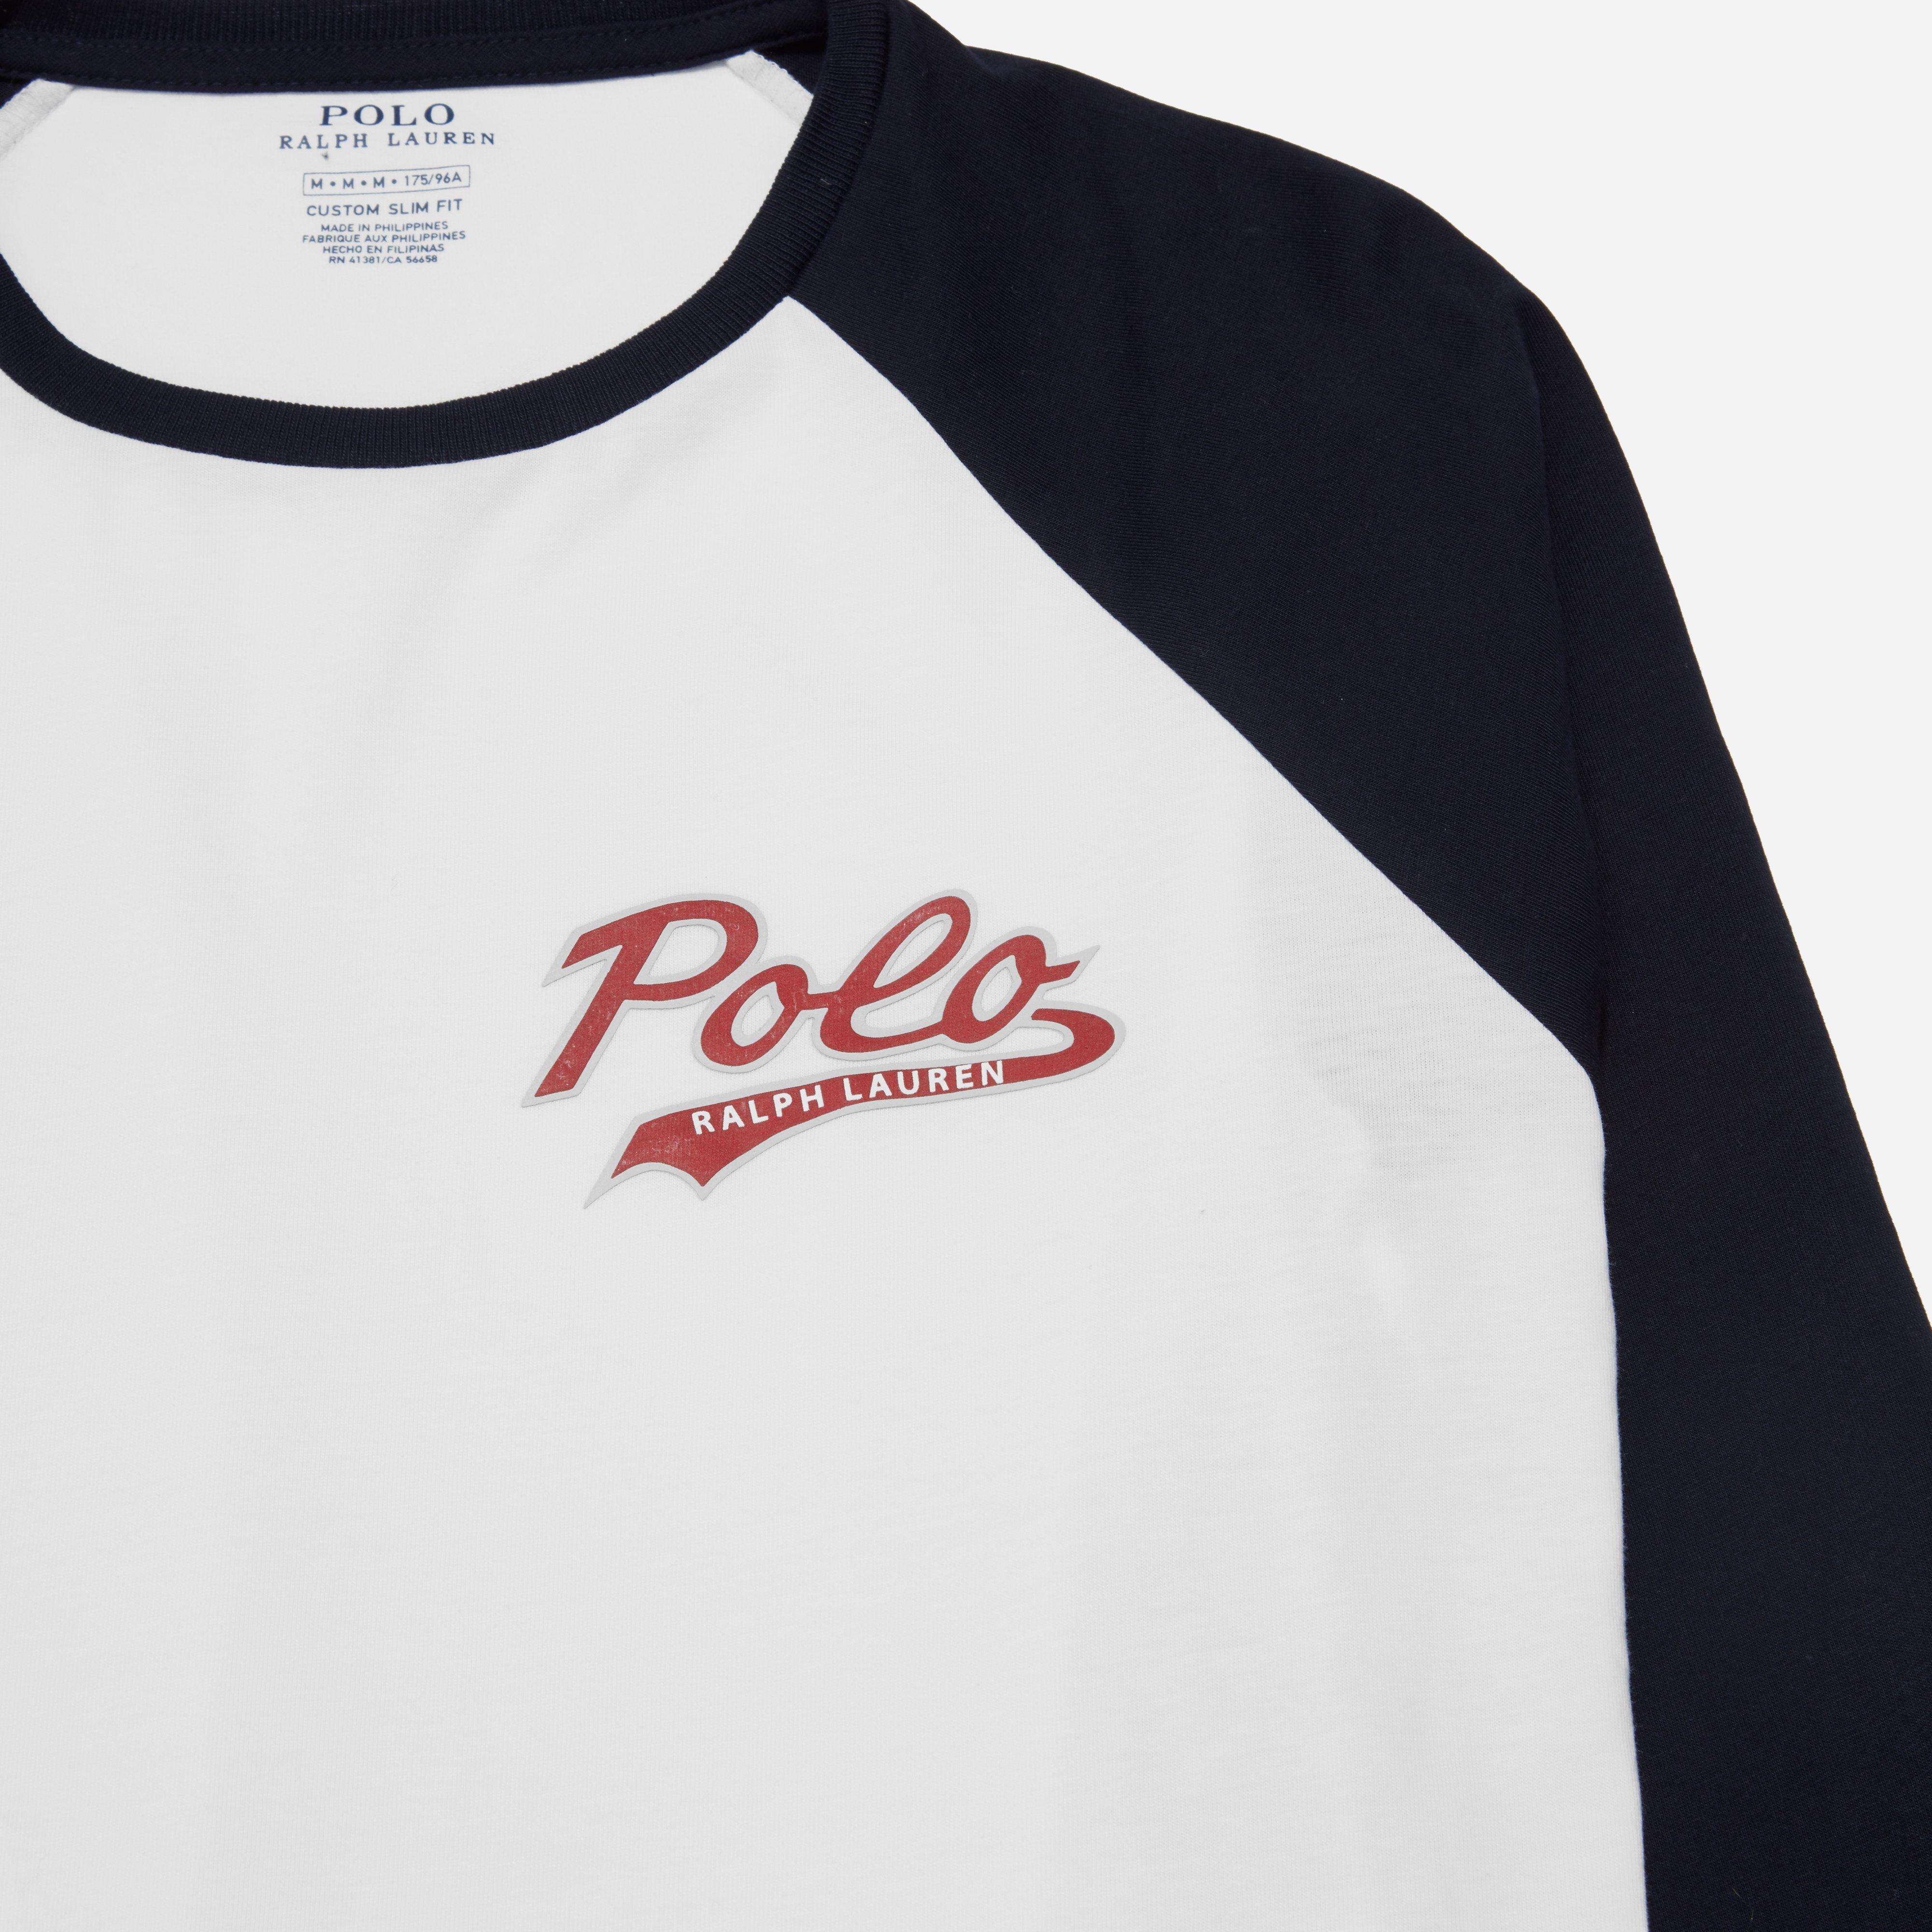 Polo Ralph Lauren Cotton Long Sleeve Raglan T-shirt in White for Men - Lyst